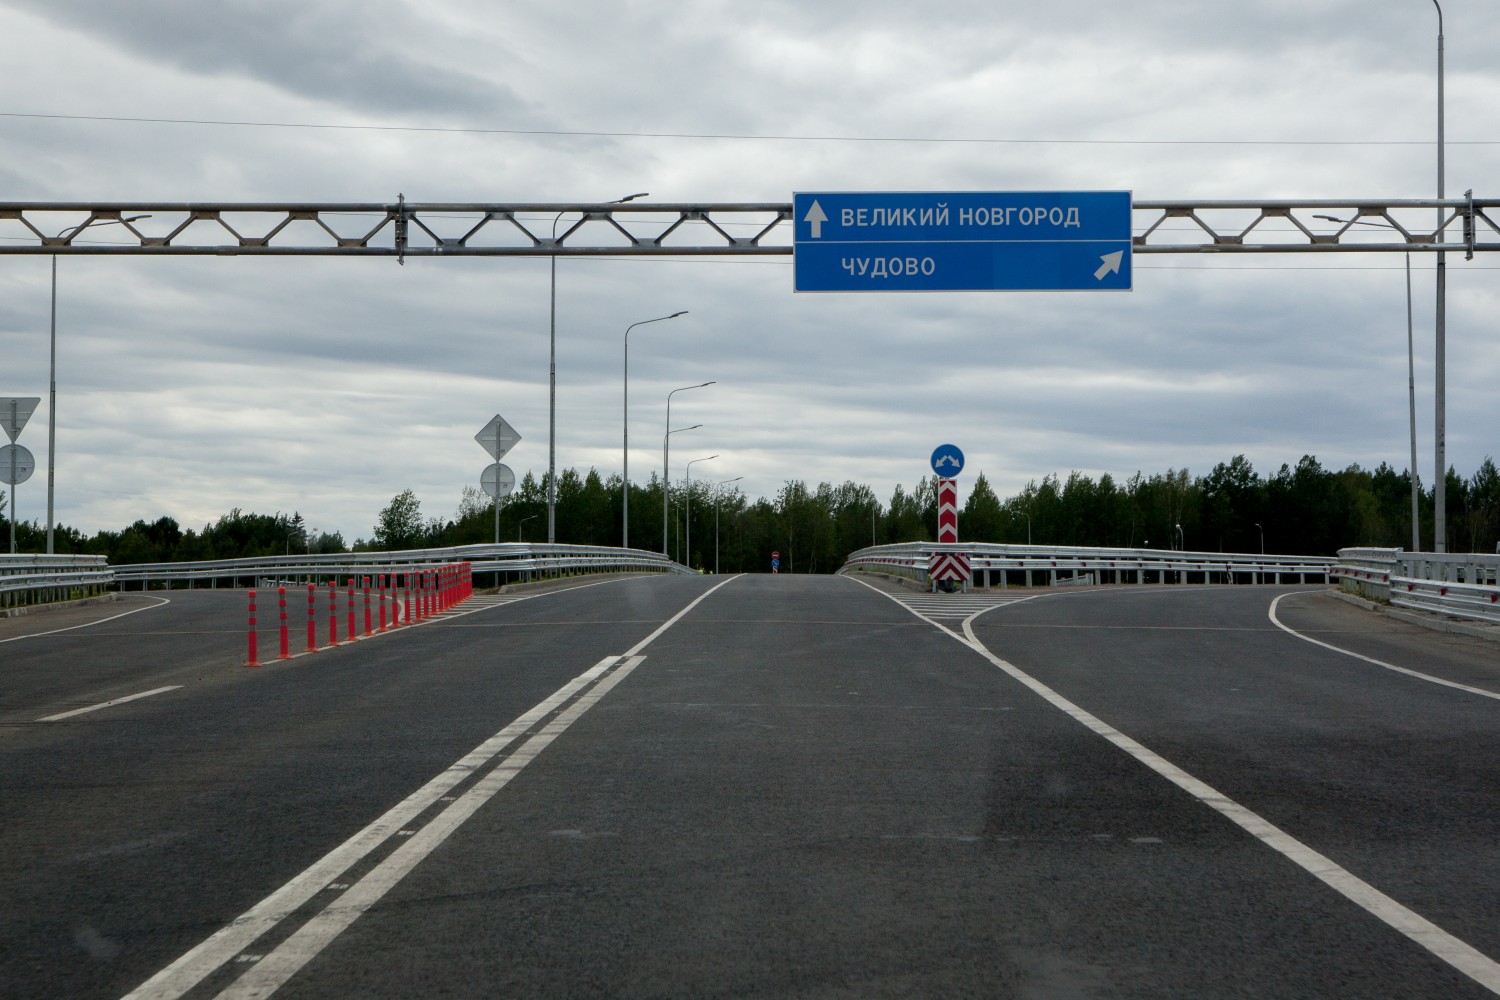 платная дорога до санкт петербурга